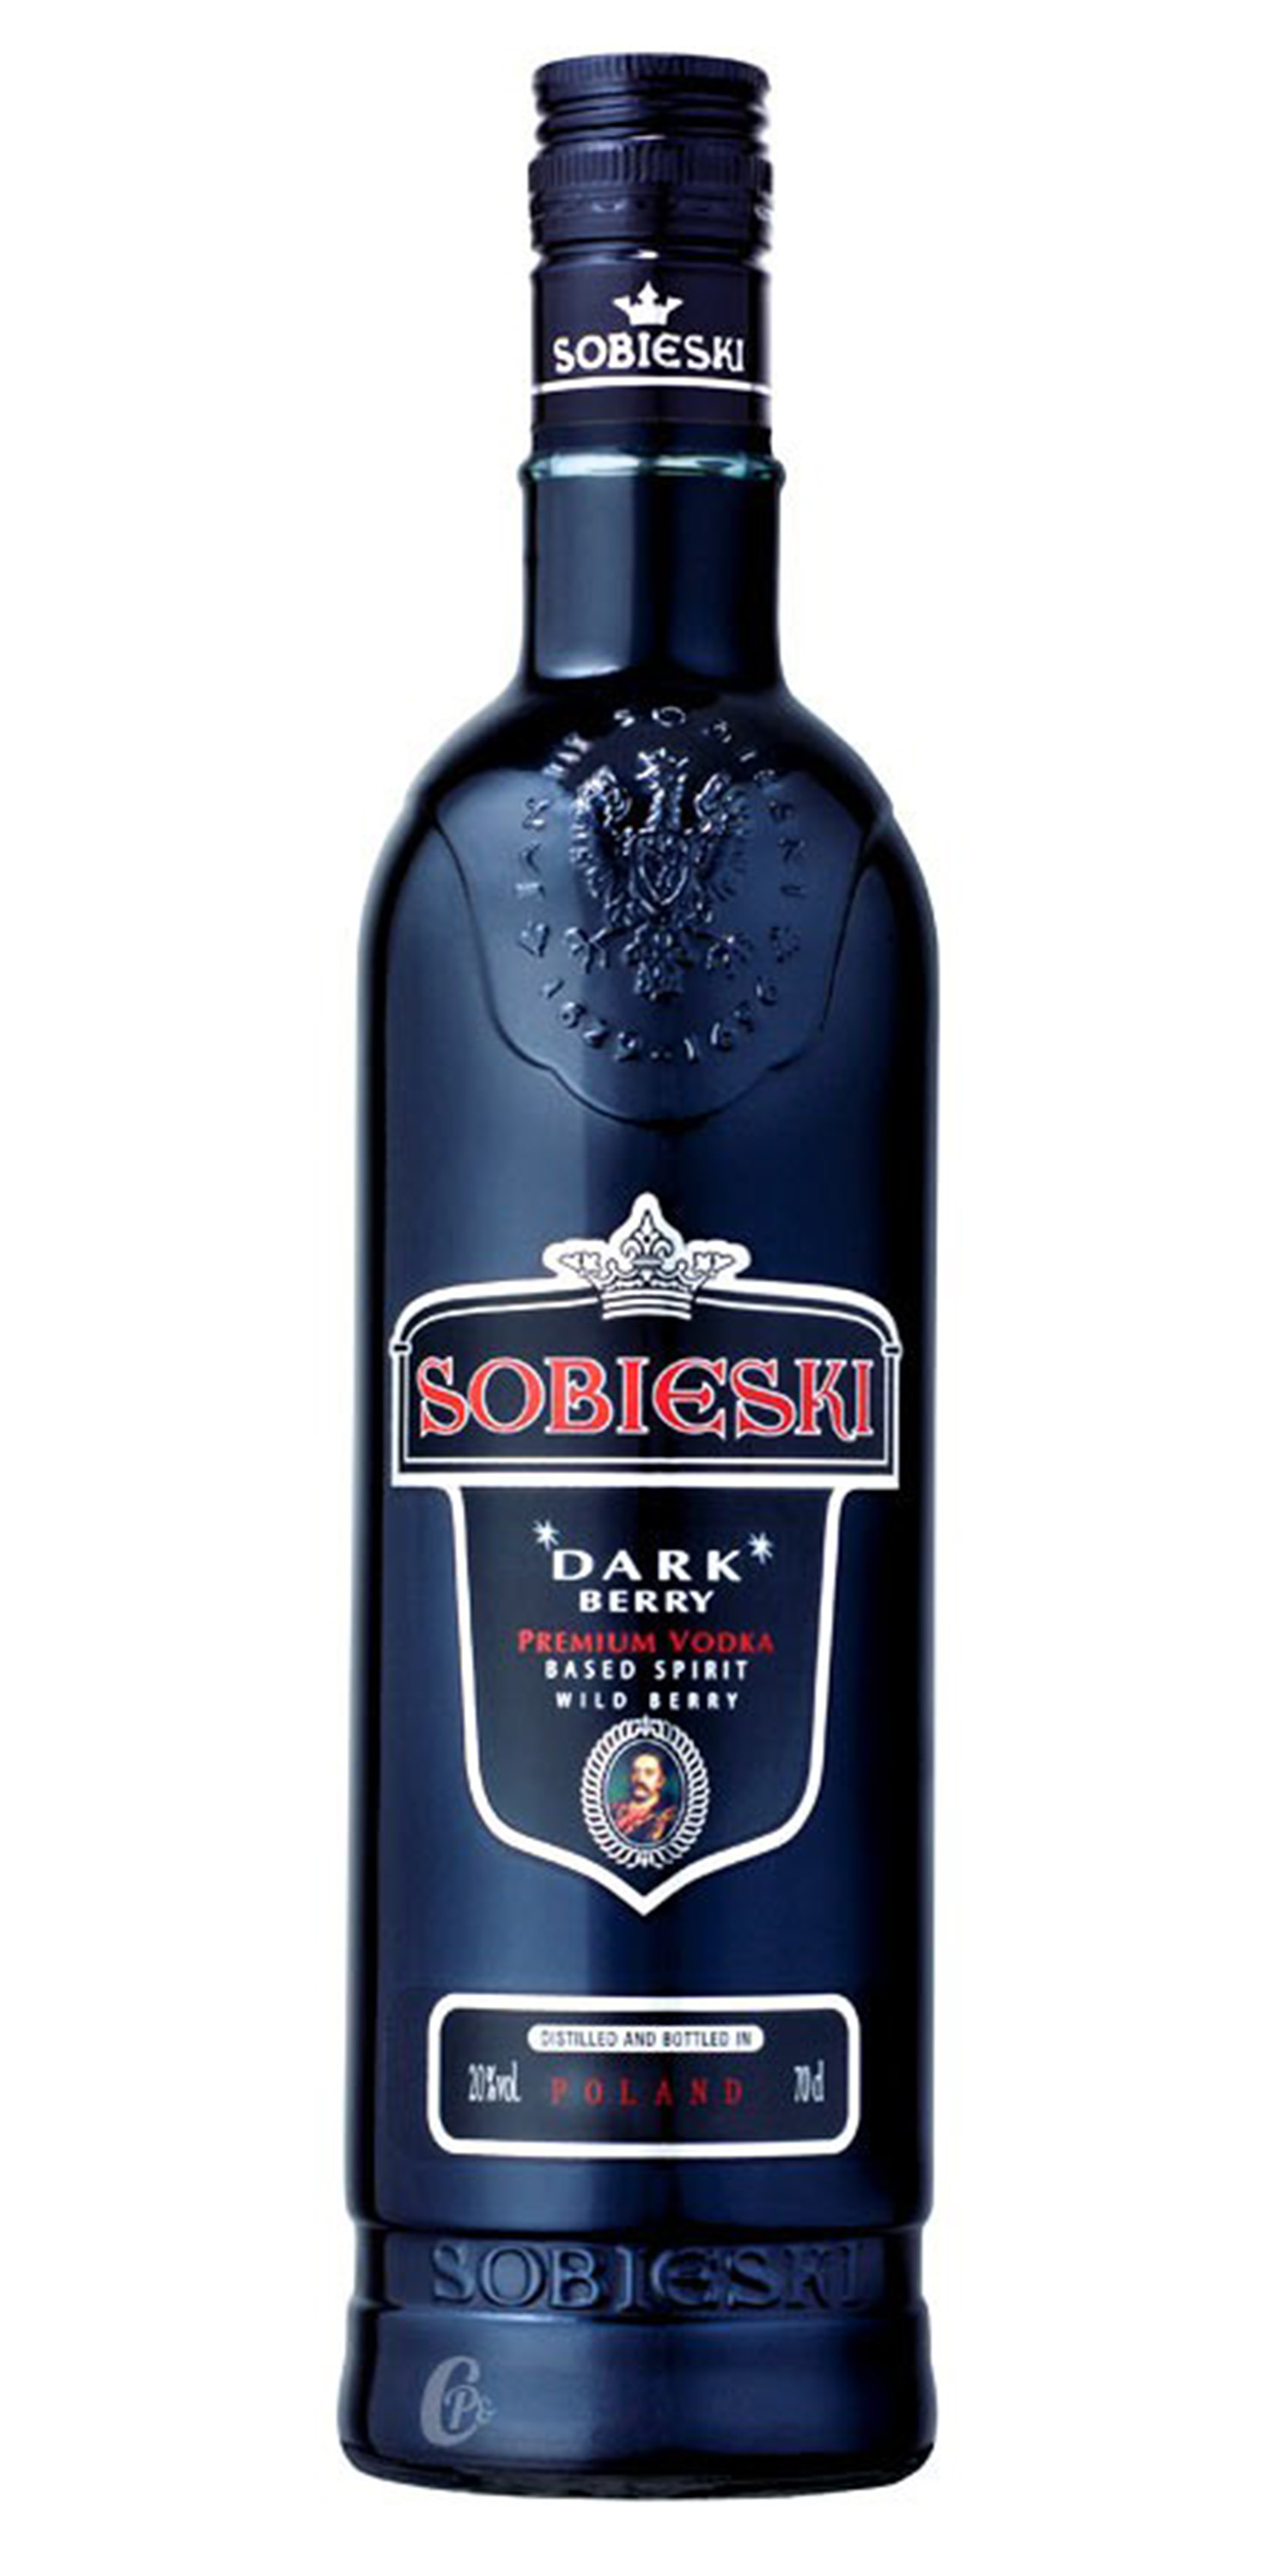 Sobieski Karamel Vodka